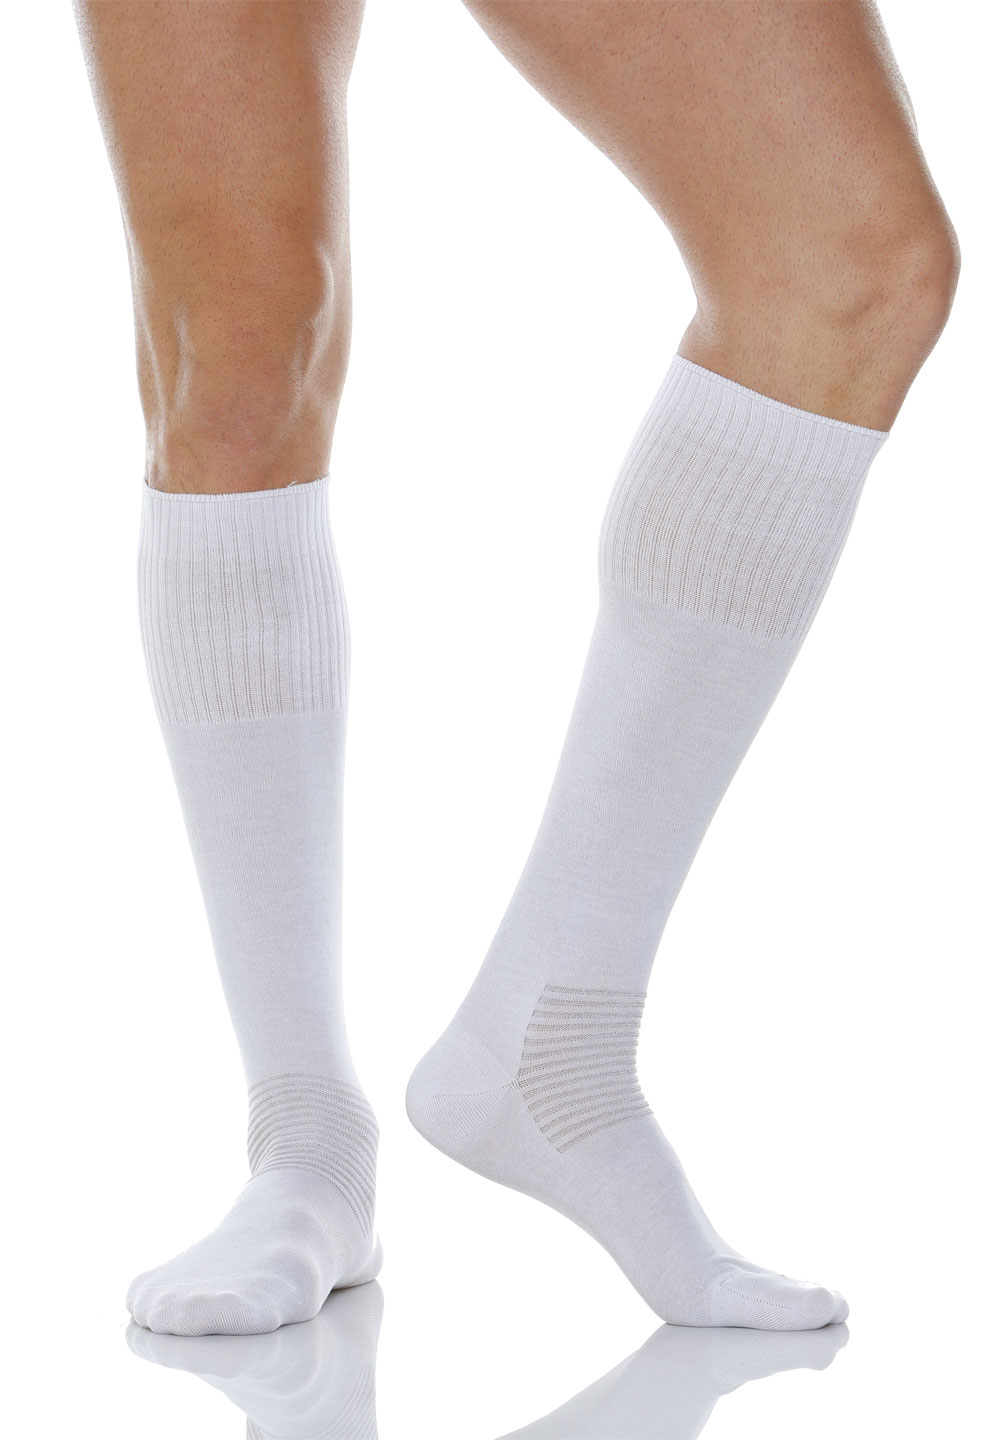 550L Buy - socks body knee Relaxsan shape Store to your Aviano Diabetic